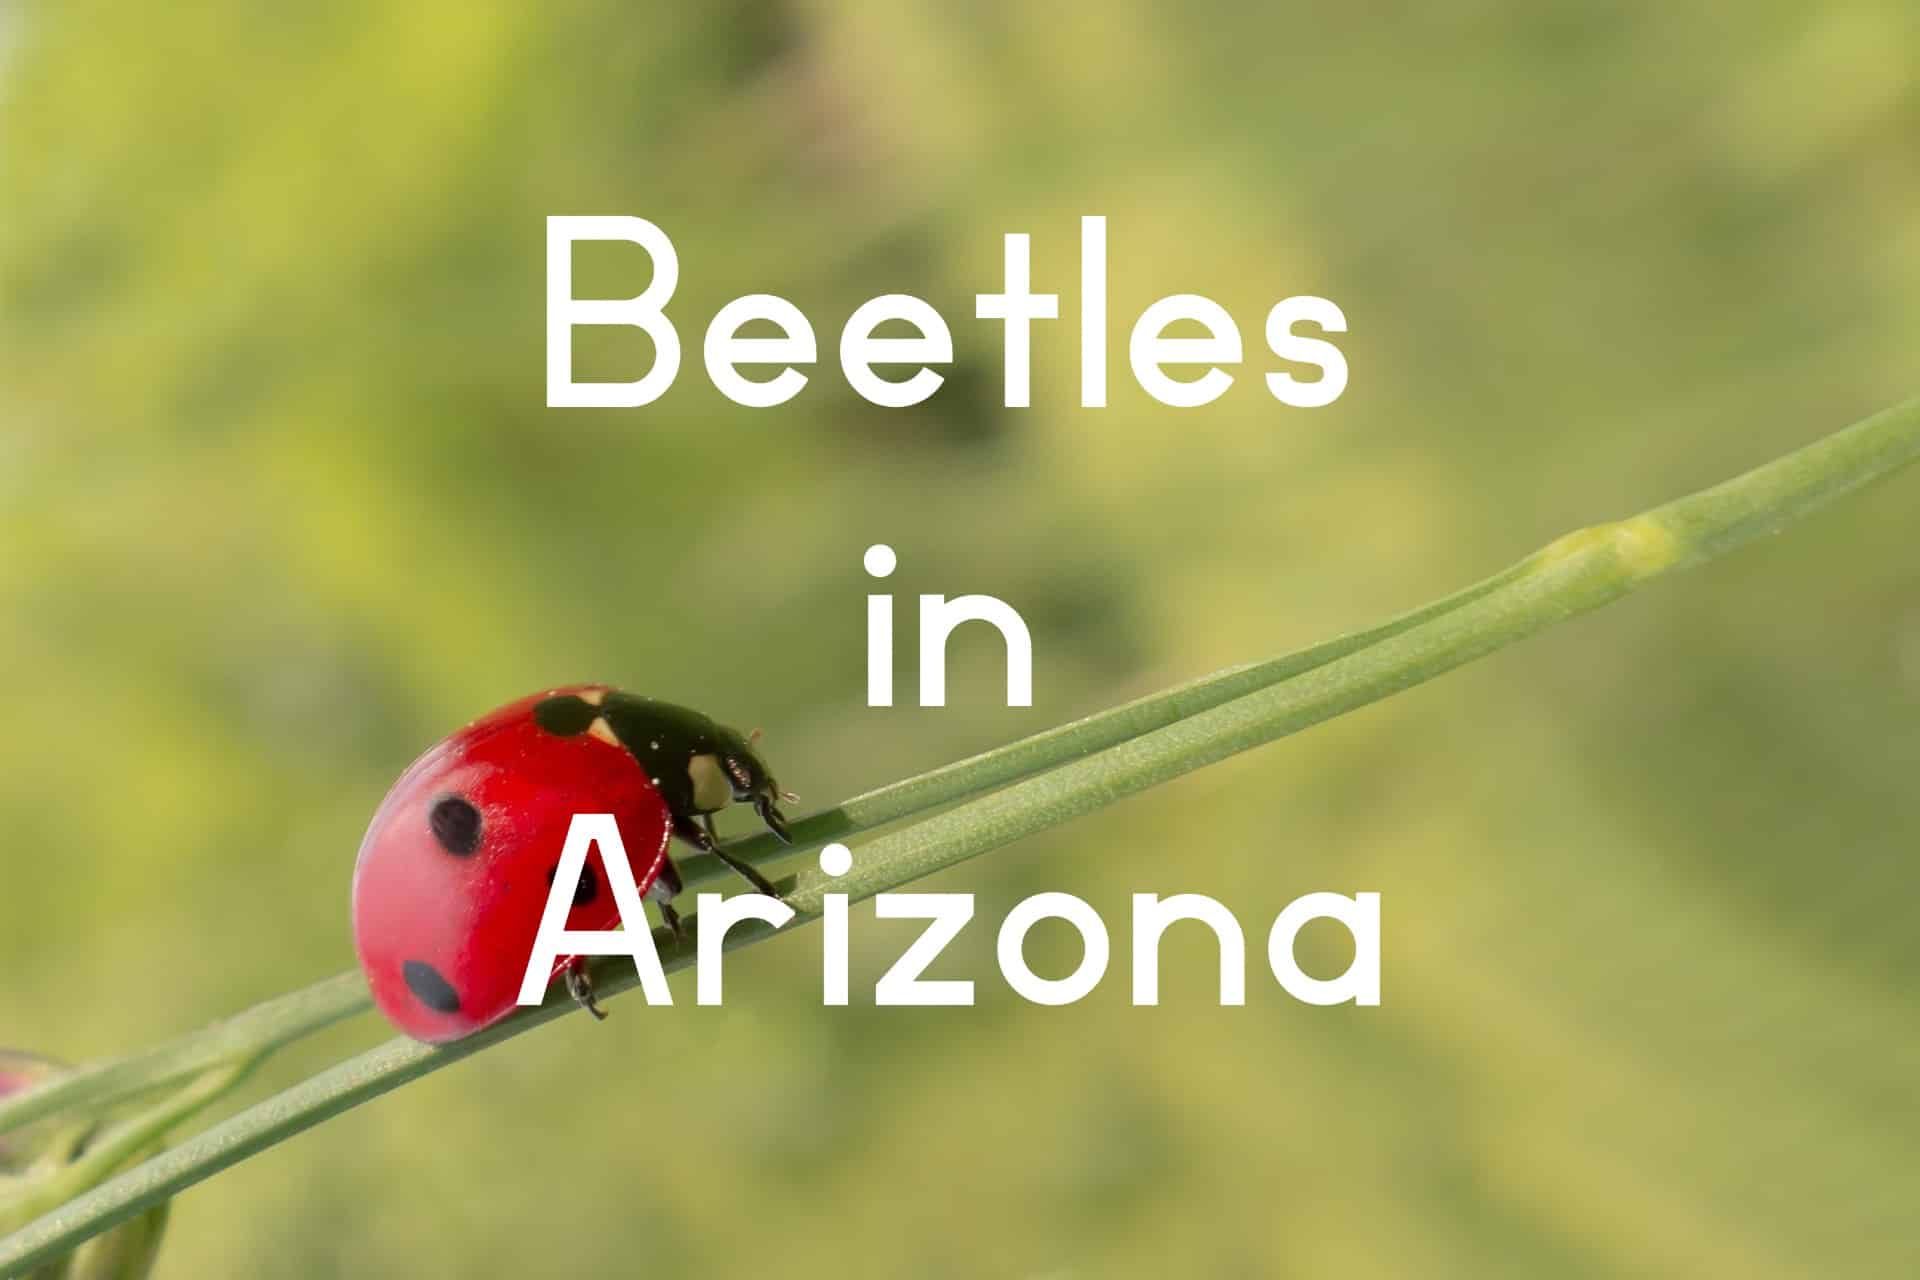 Arizona Beetles Identification